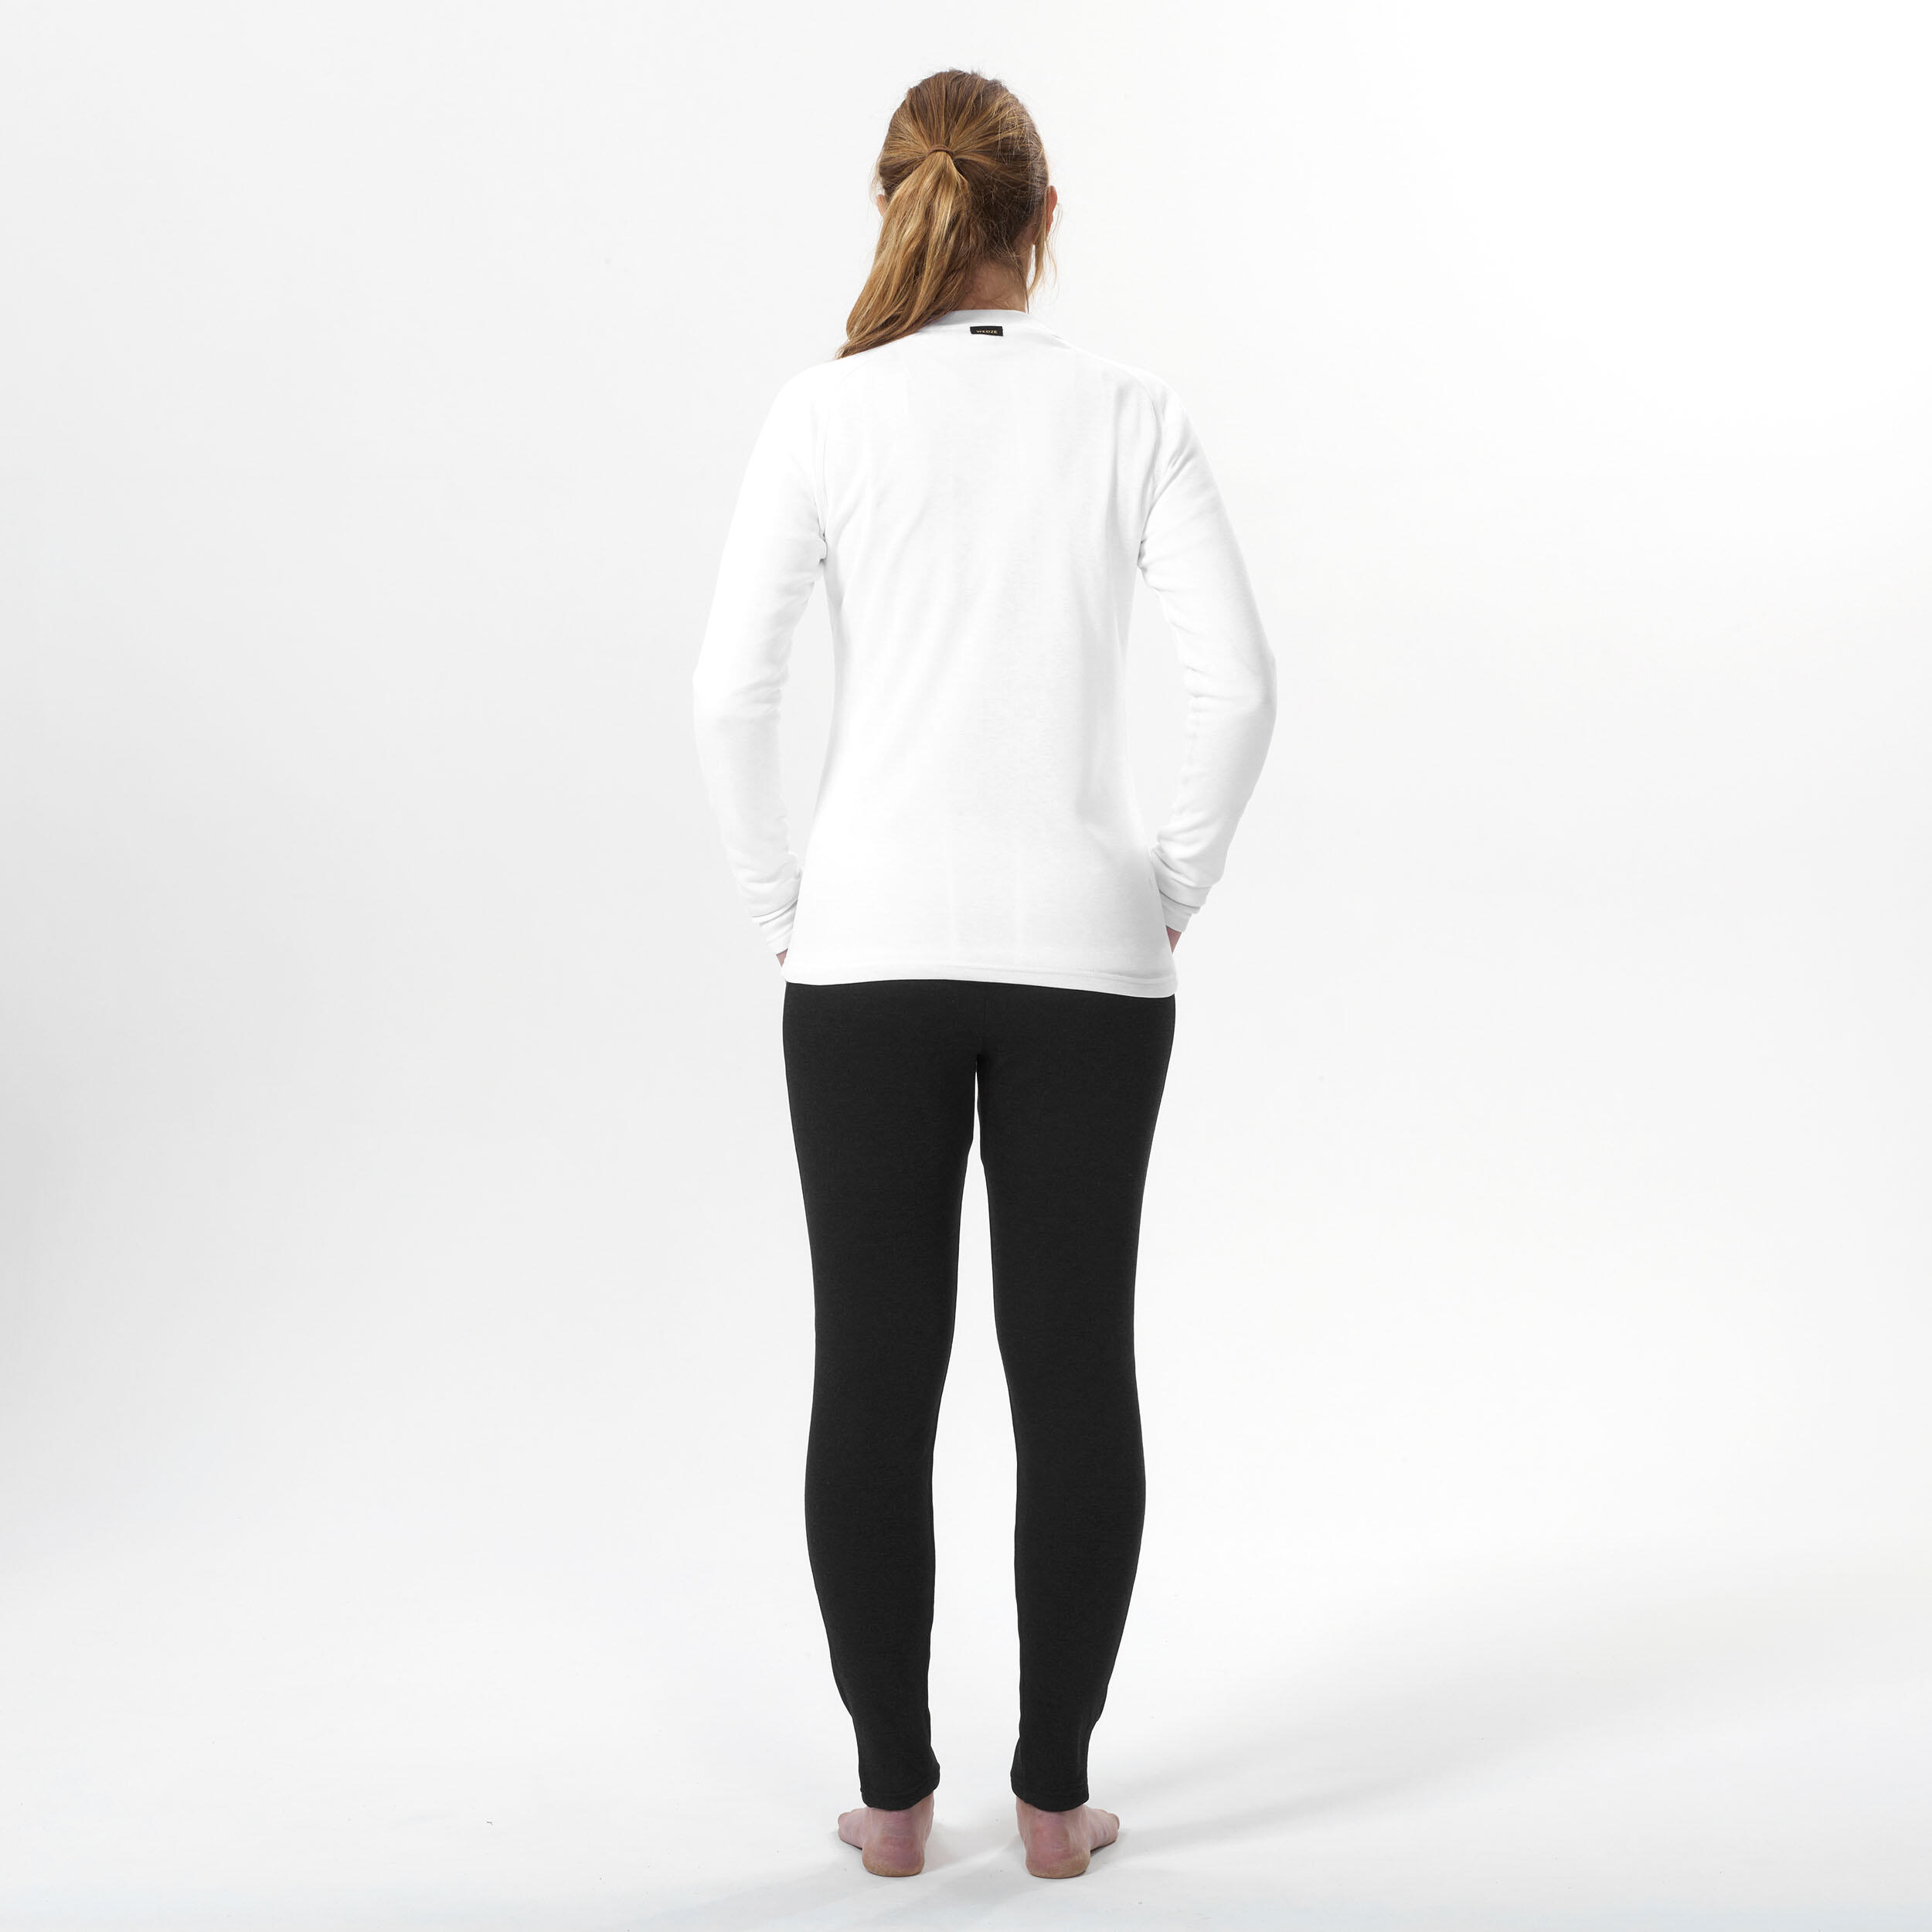 Buy WEDZE By Decathlon Women Grey Colourblocked Thermal Bottoms